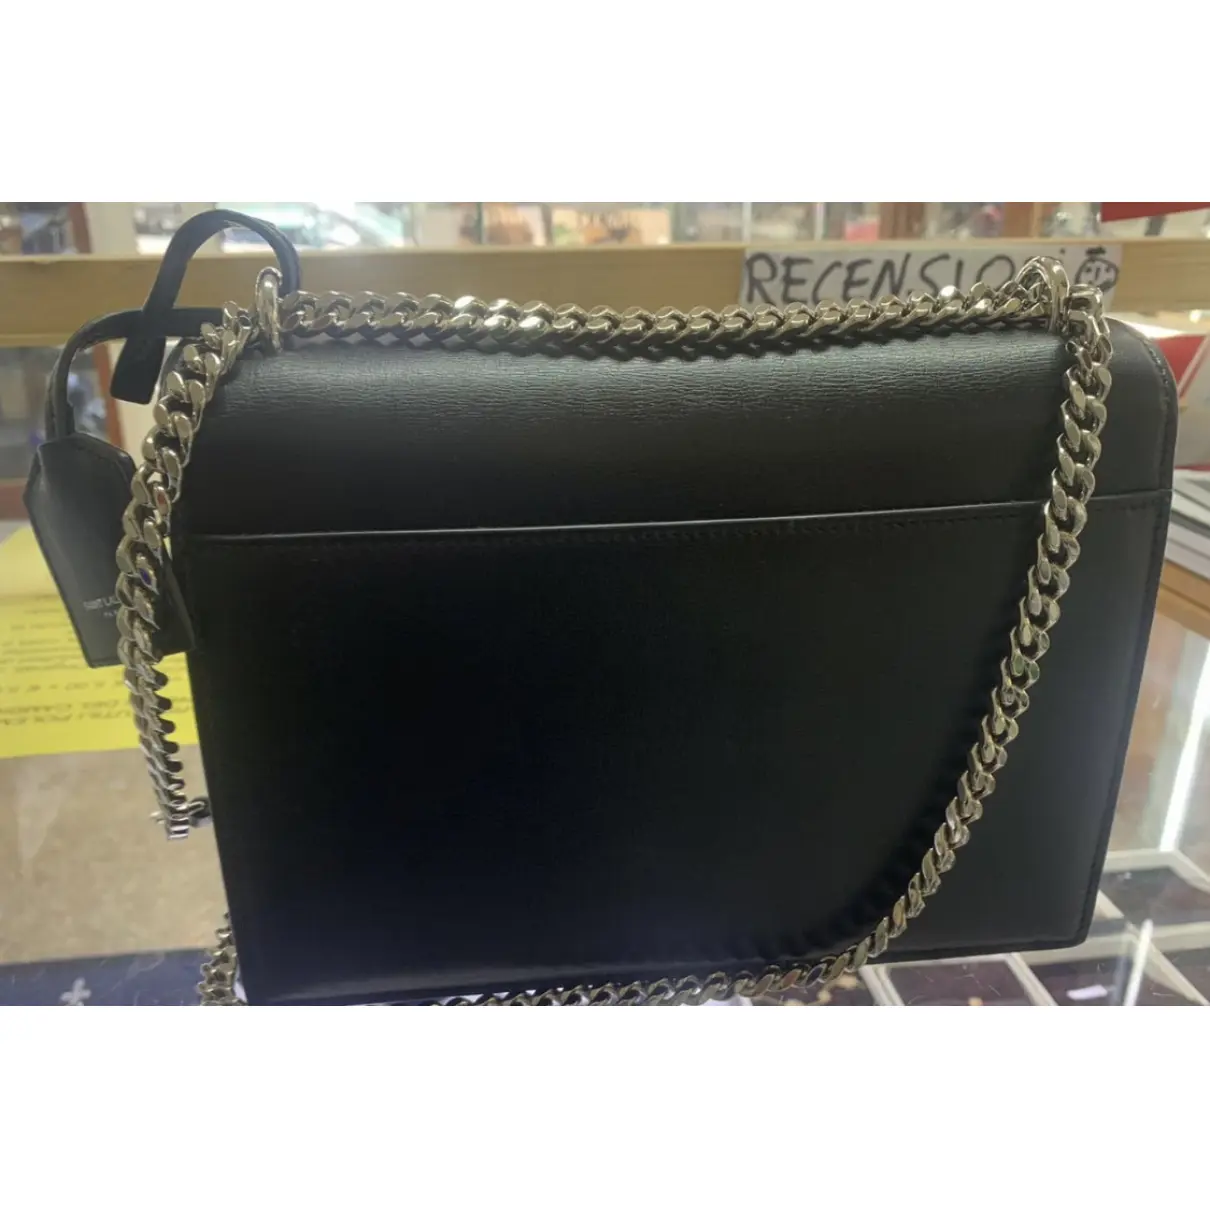 Buy Saint Laurent Sunset leather crossbody bag online